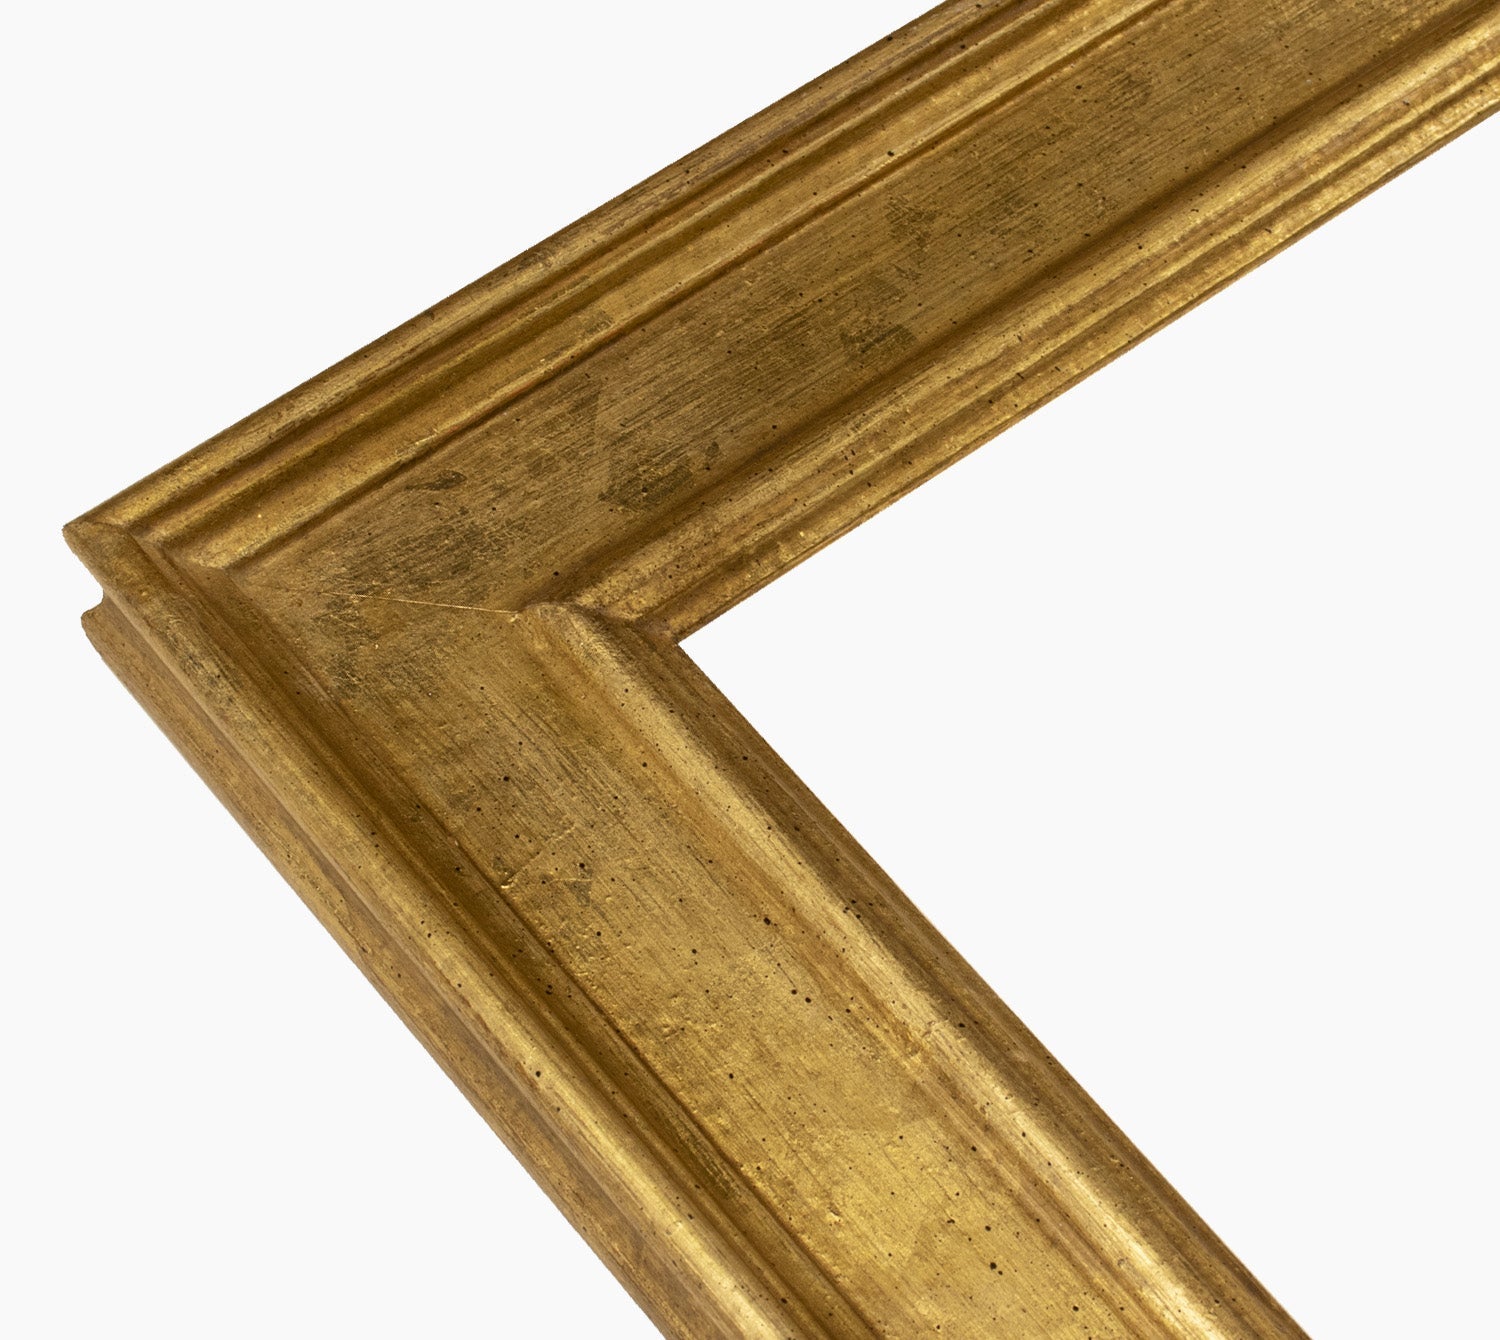 340.010 cadre en bois à la feuille d'or mesure de profil 60x30 mm Lombarda cornici S.n.c.